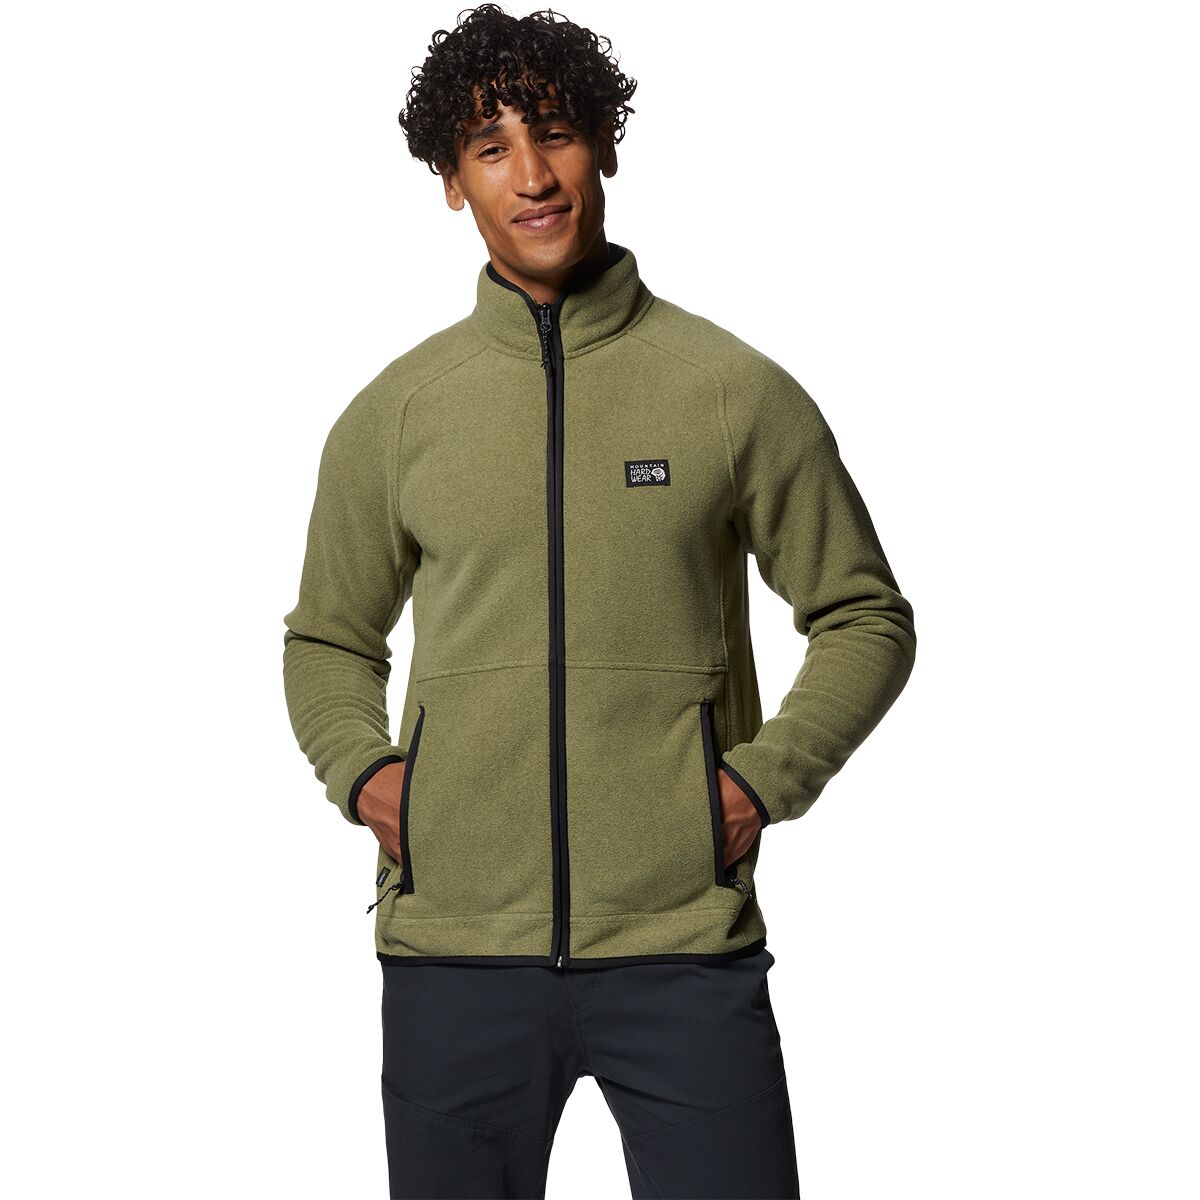 Mountain Hardwear Polartec Double Brushed Full-Zip Jacket - Men's